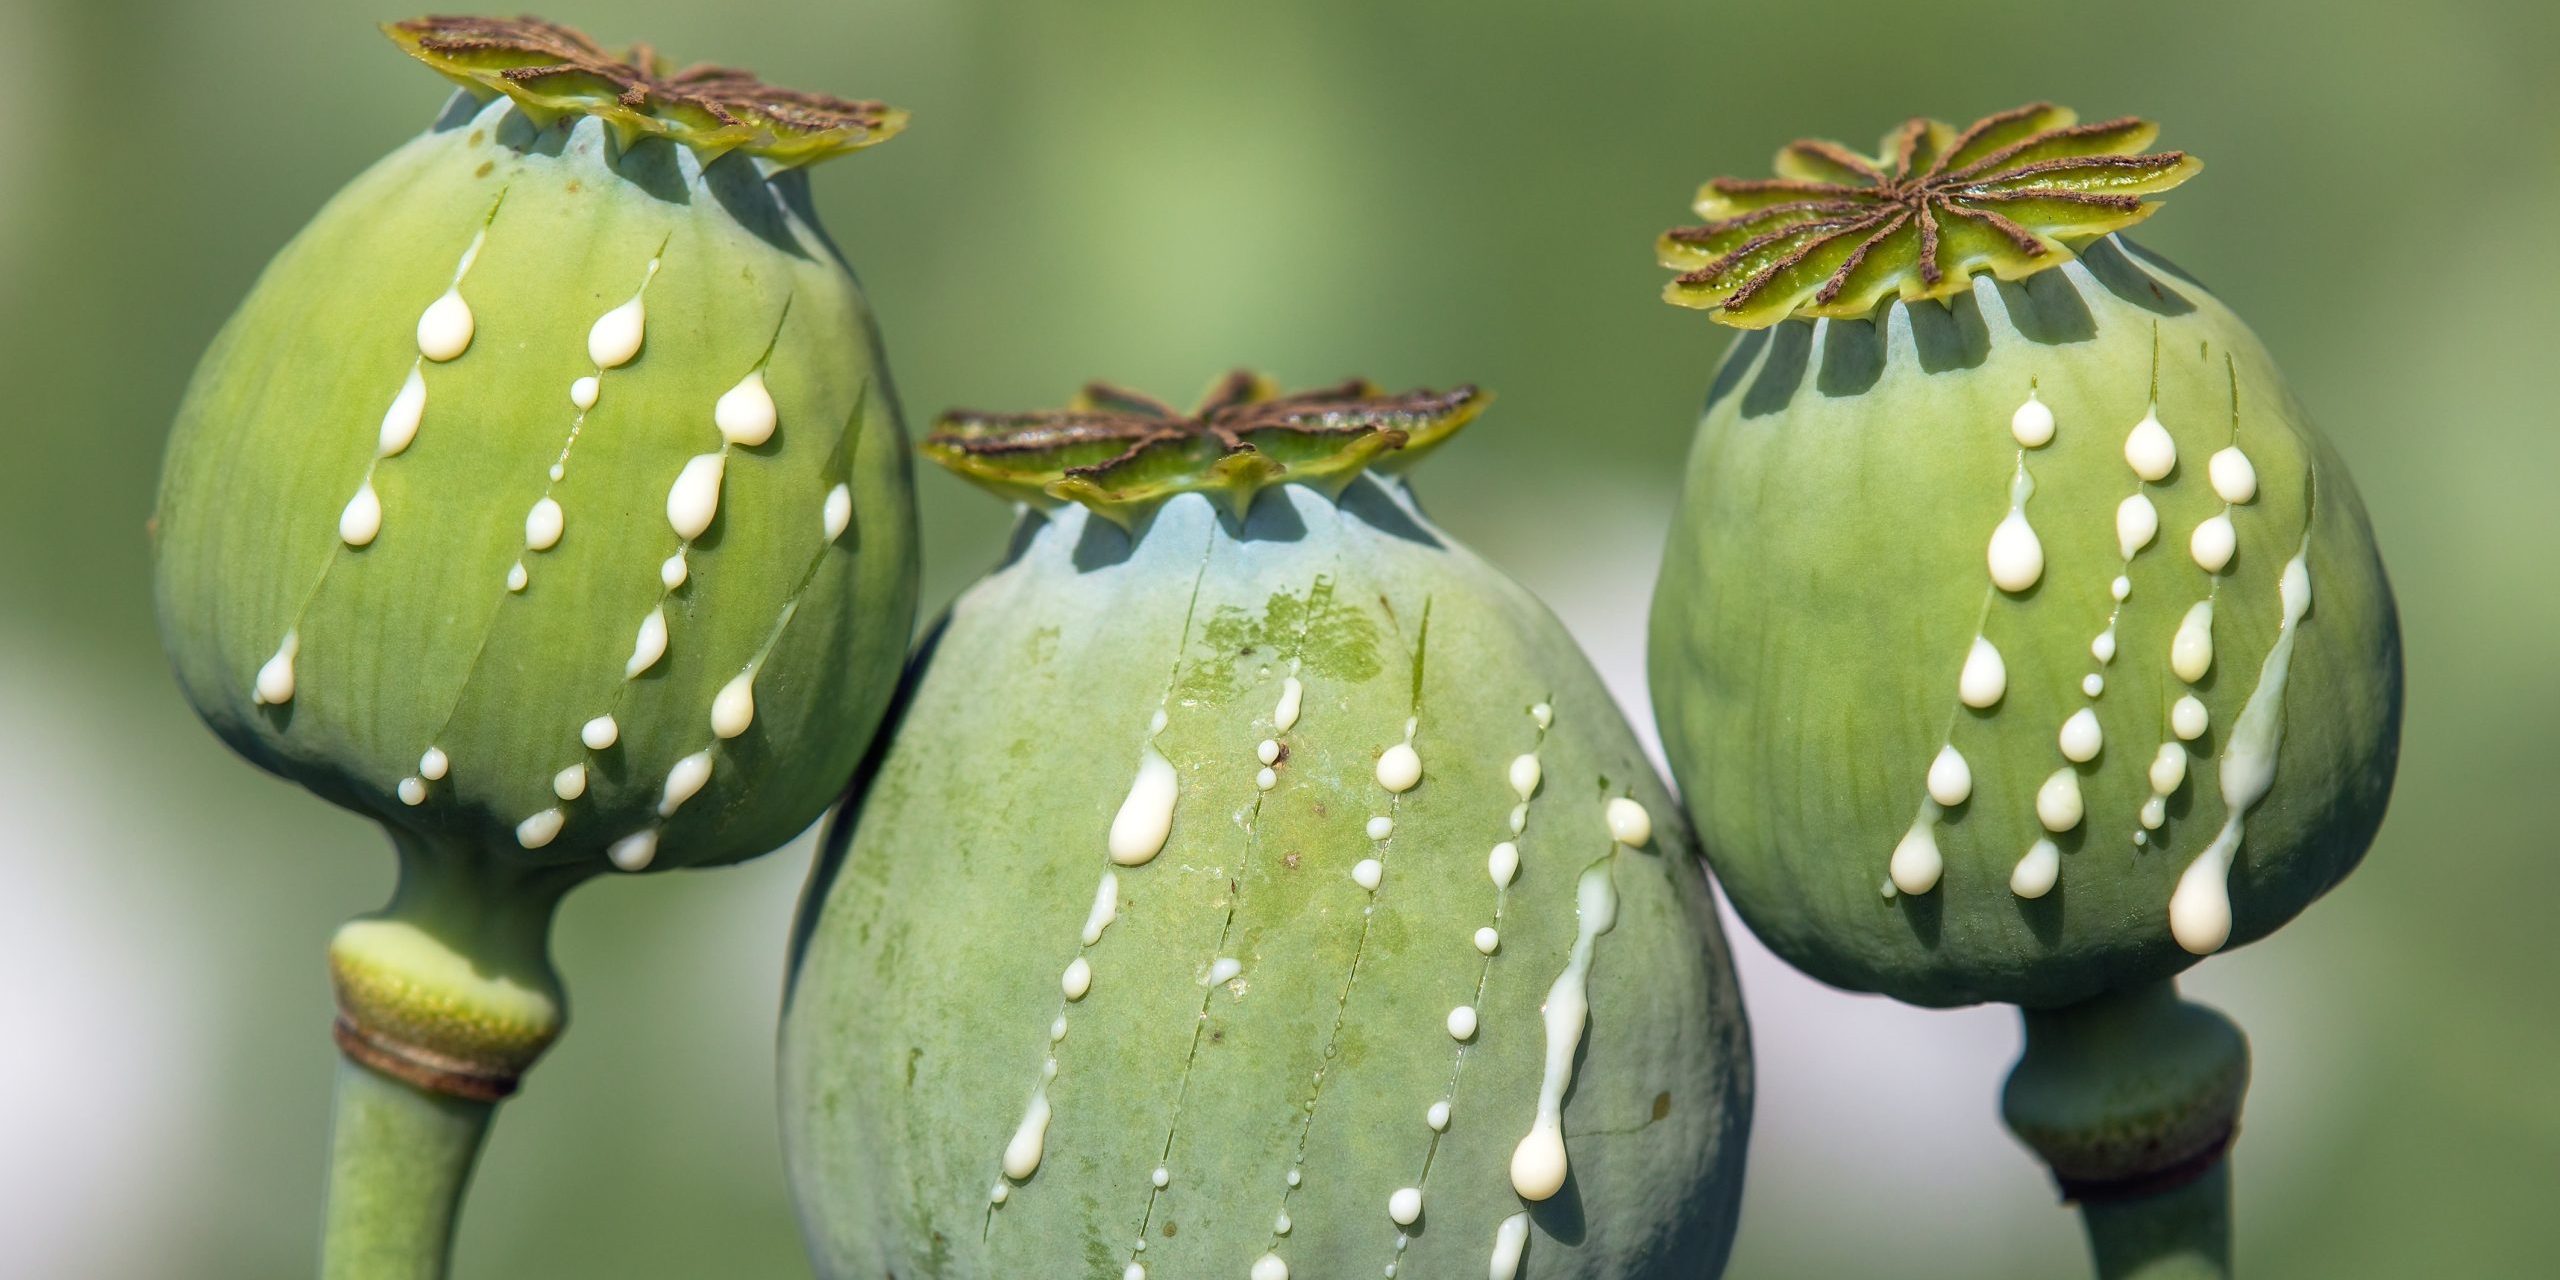 opium poppy heads papaver somniferum with opium drops